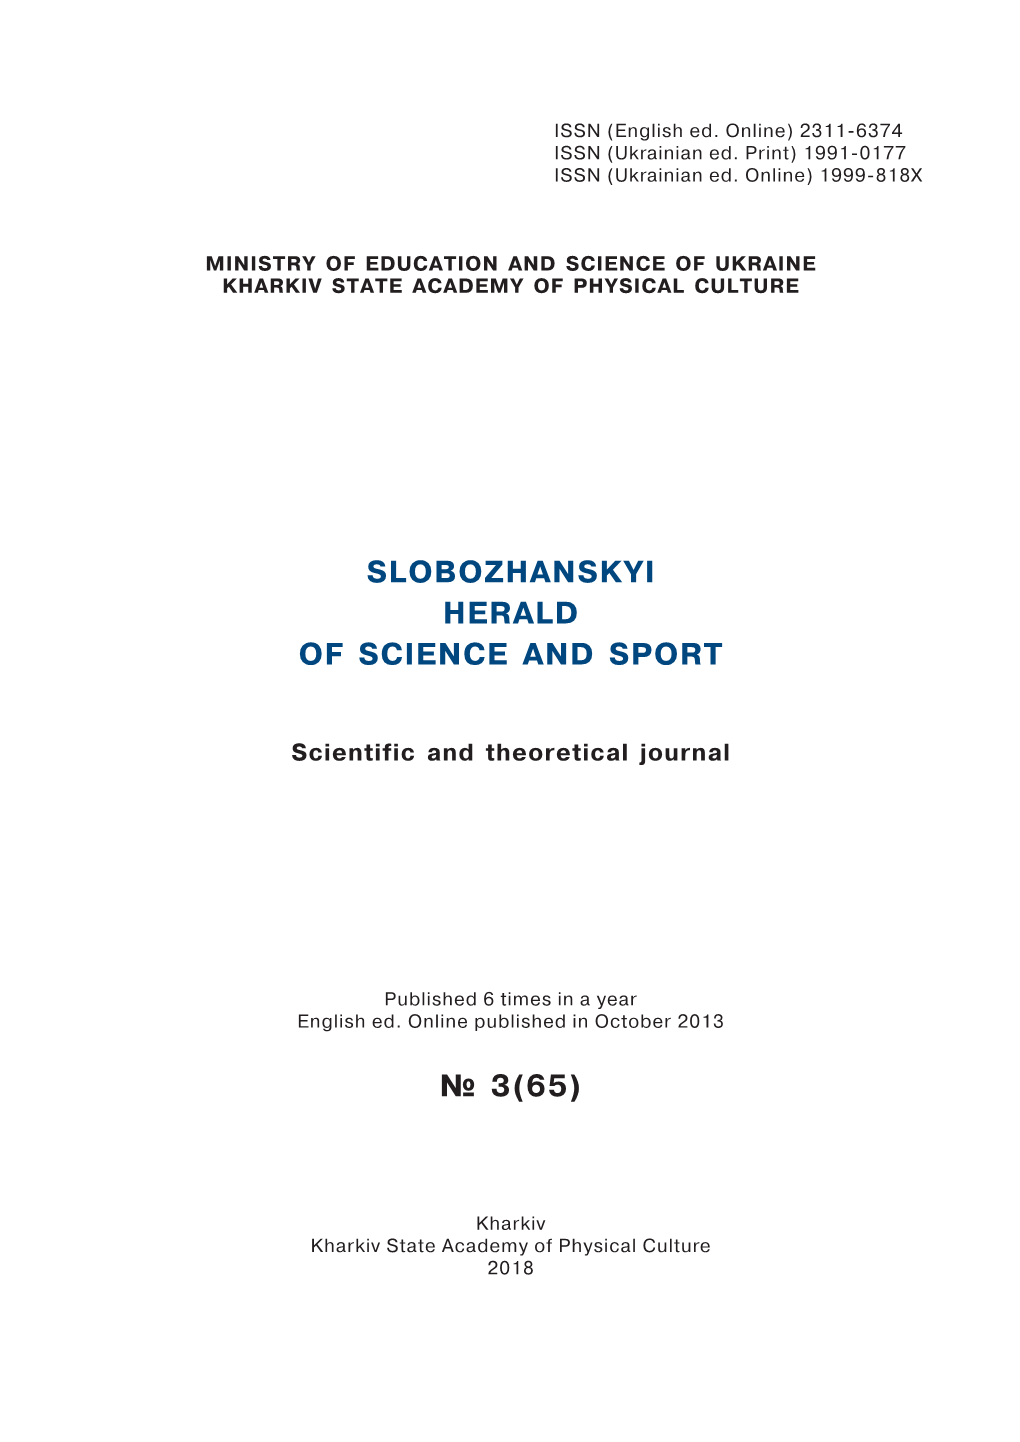 Slobozhanskyi Herald of Science and Sport № 3(65)